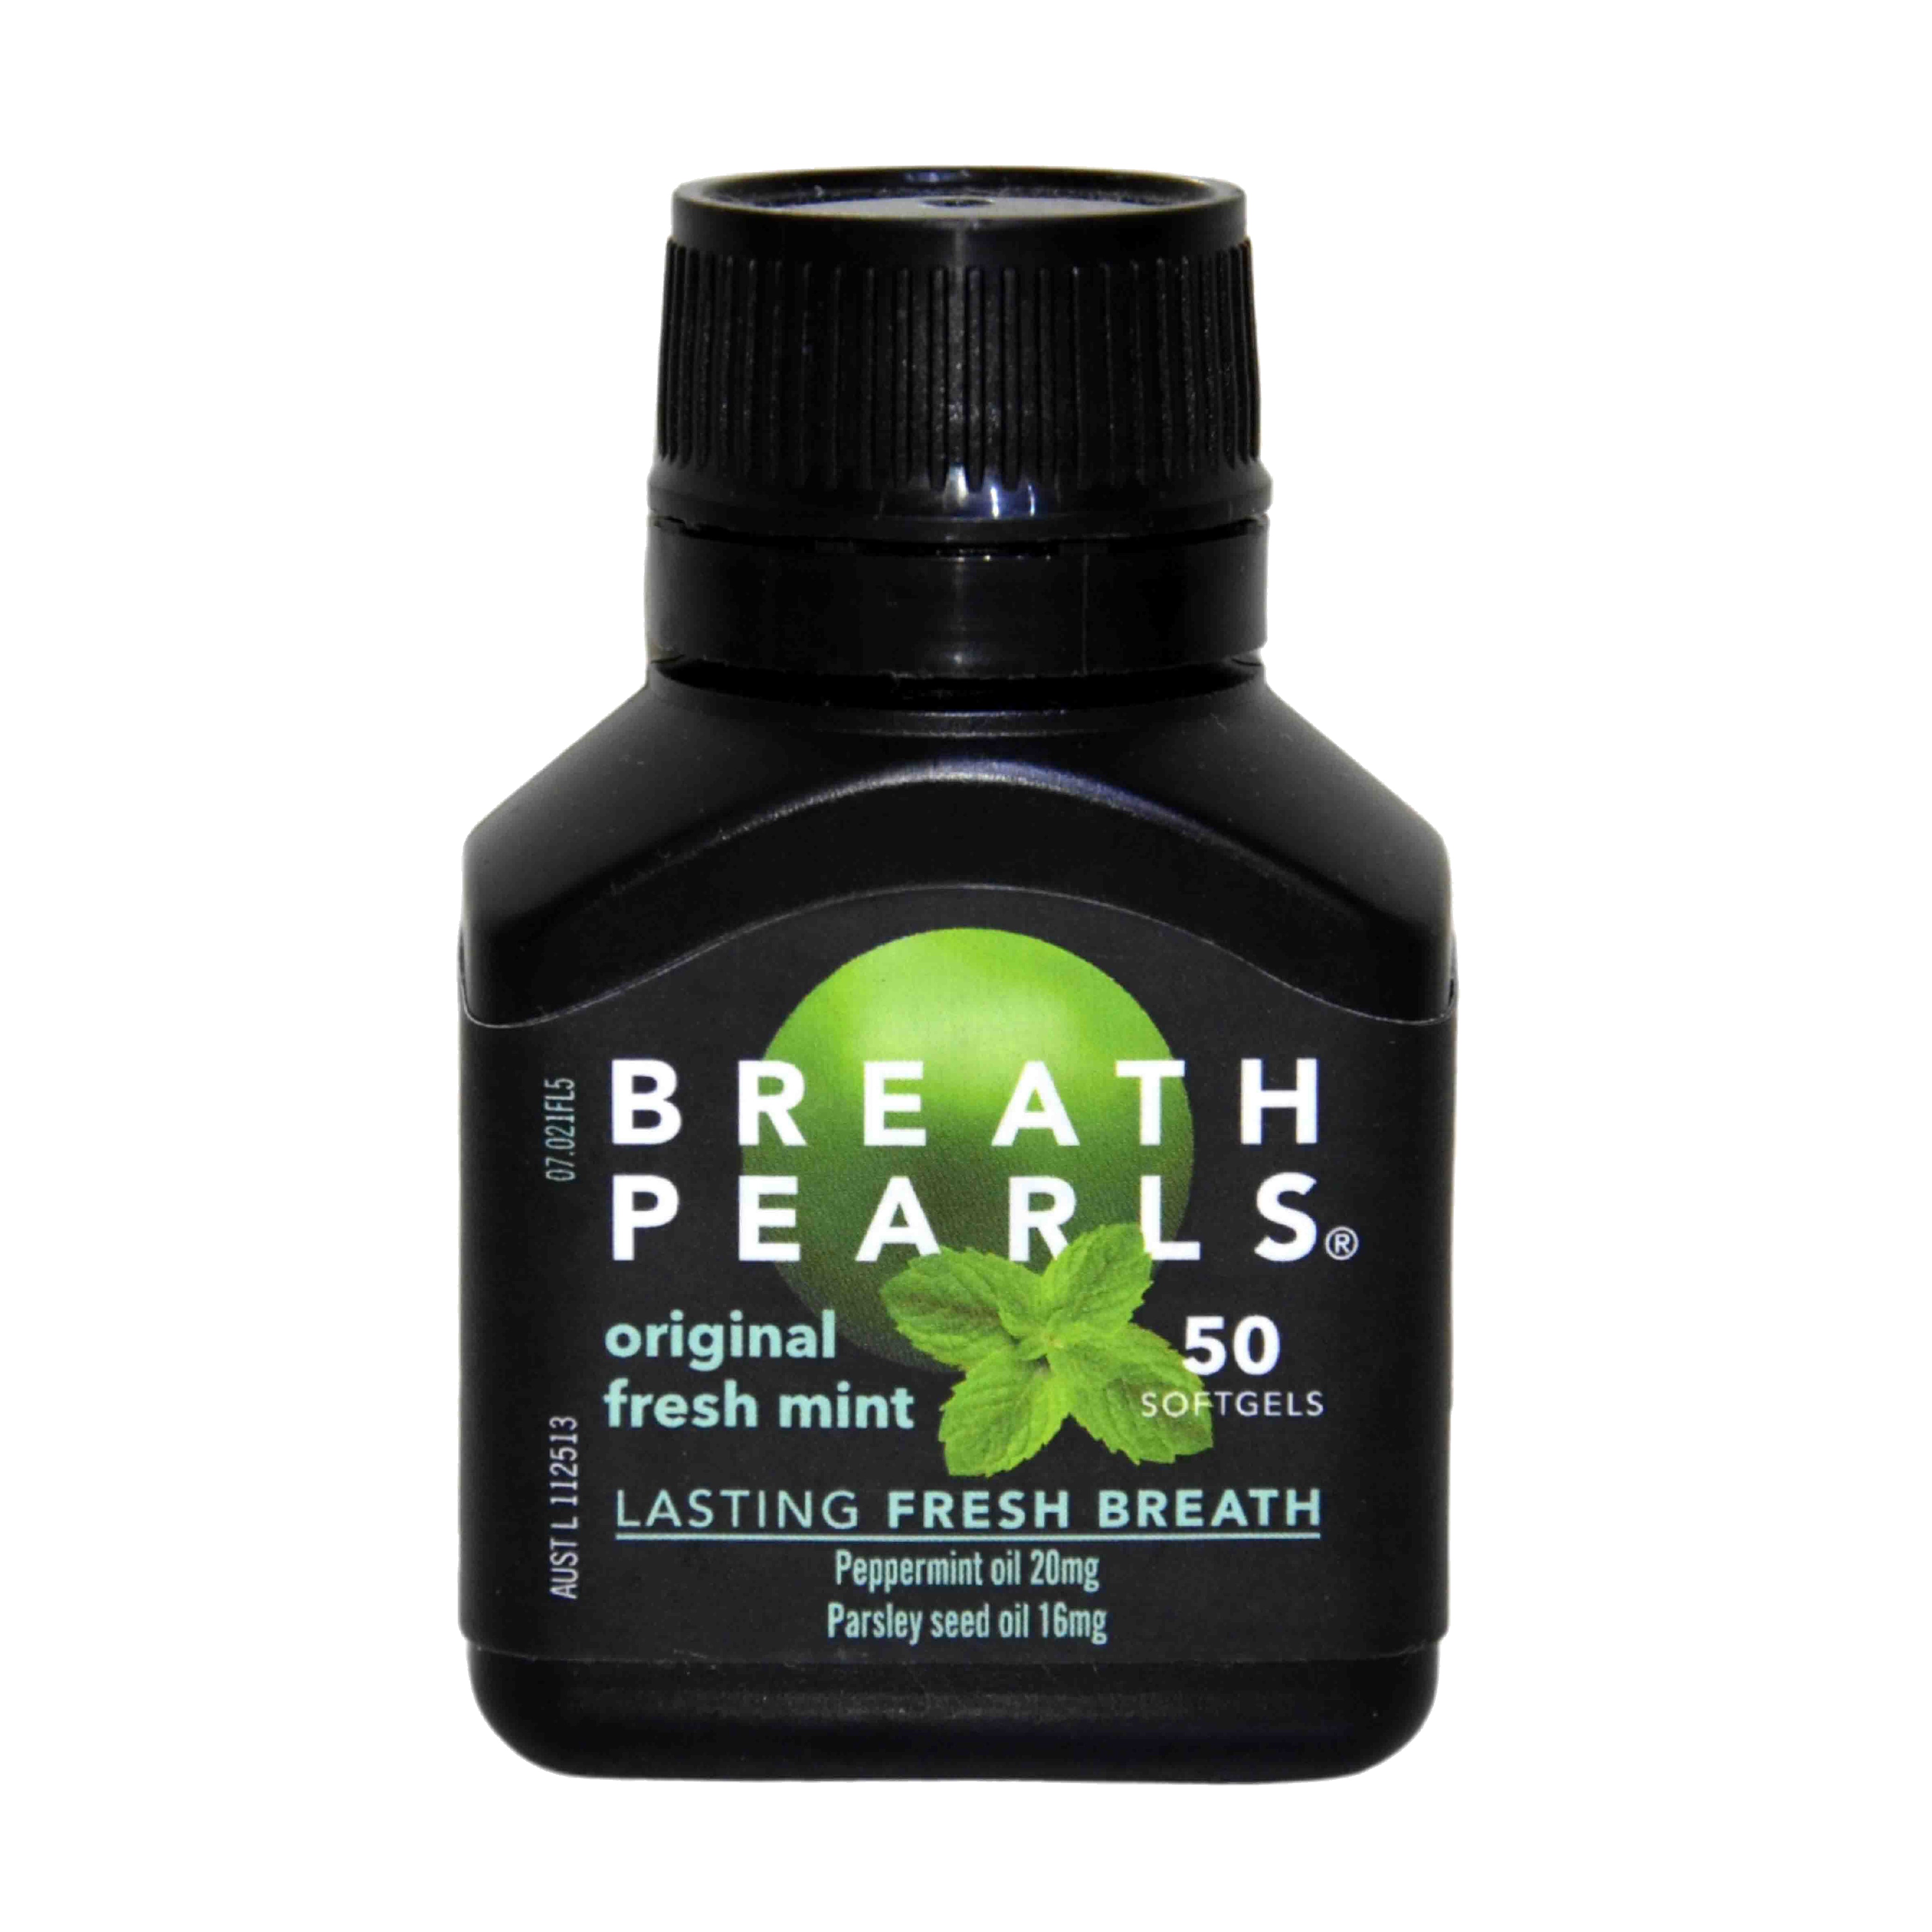 Breath Pearls Original (50 Softgels)